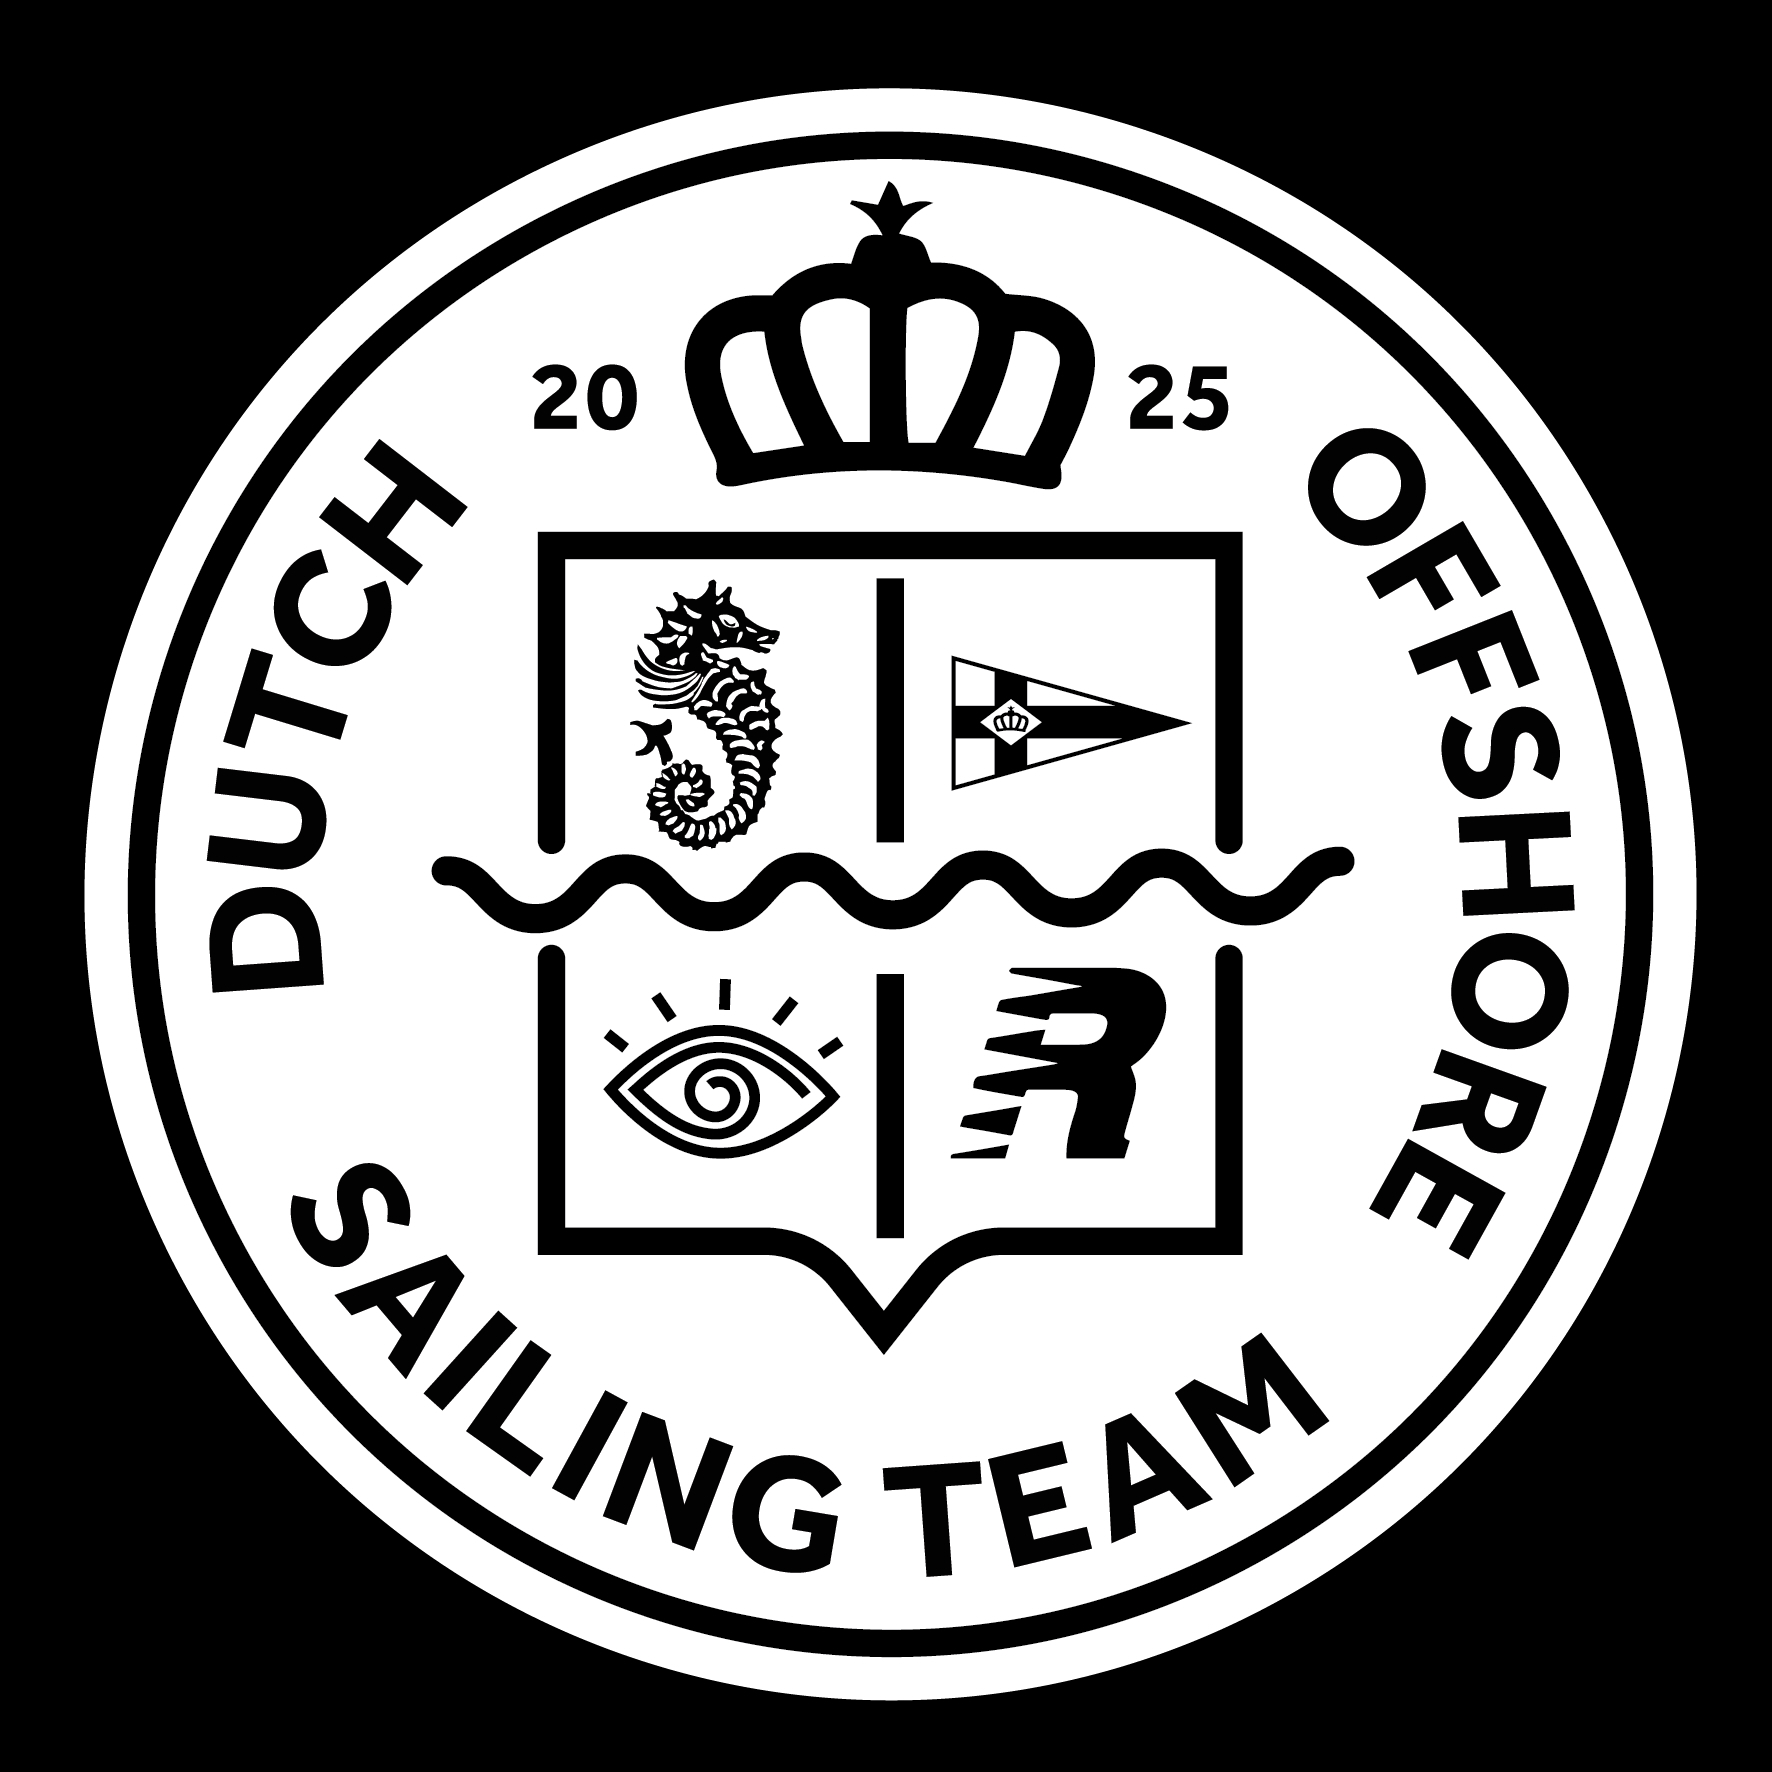 Dutch Offshore Sailing Team